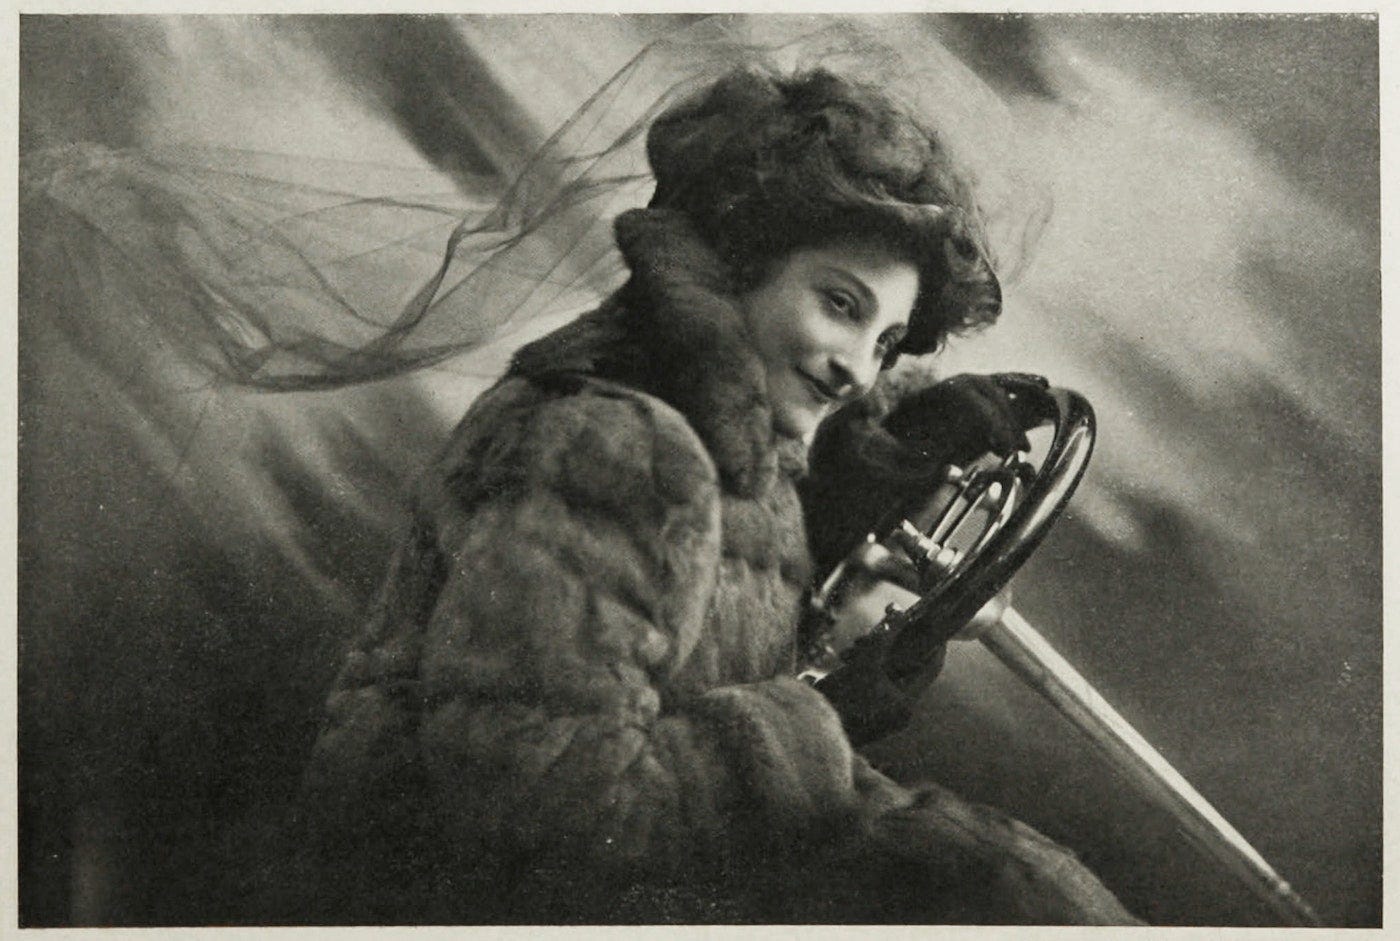 Dorothy Levitt, The Woman and the Car, John Lane, 1909